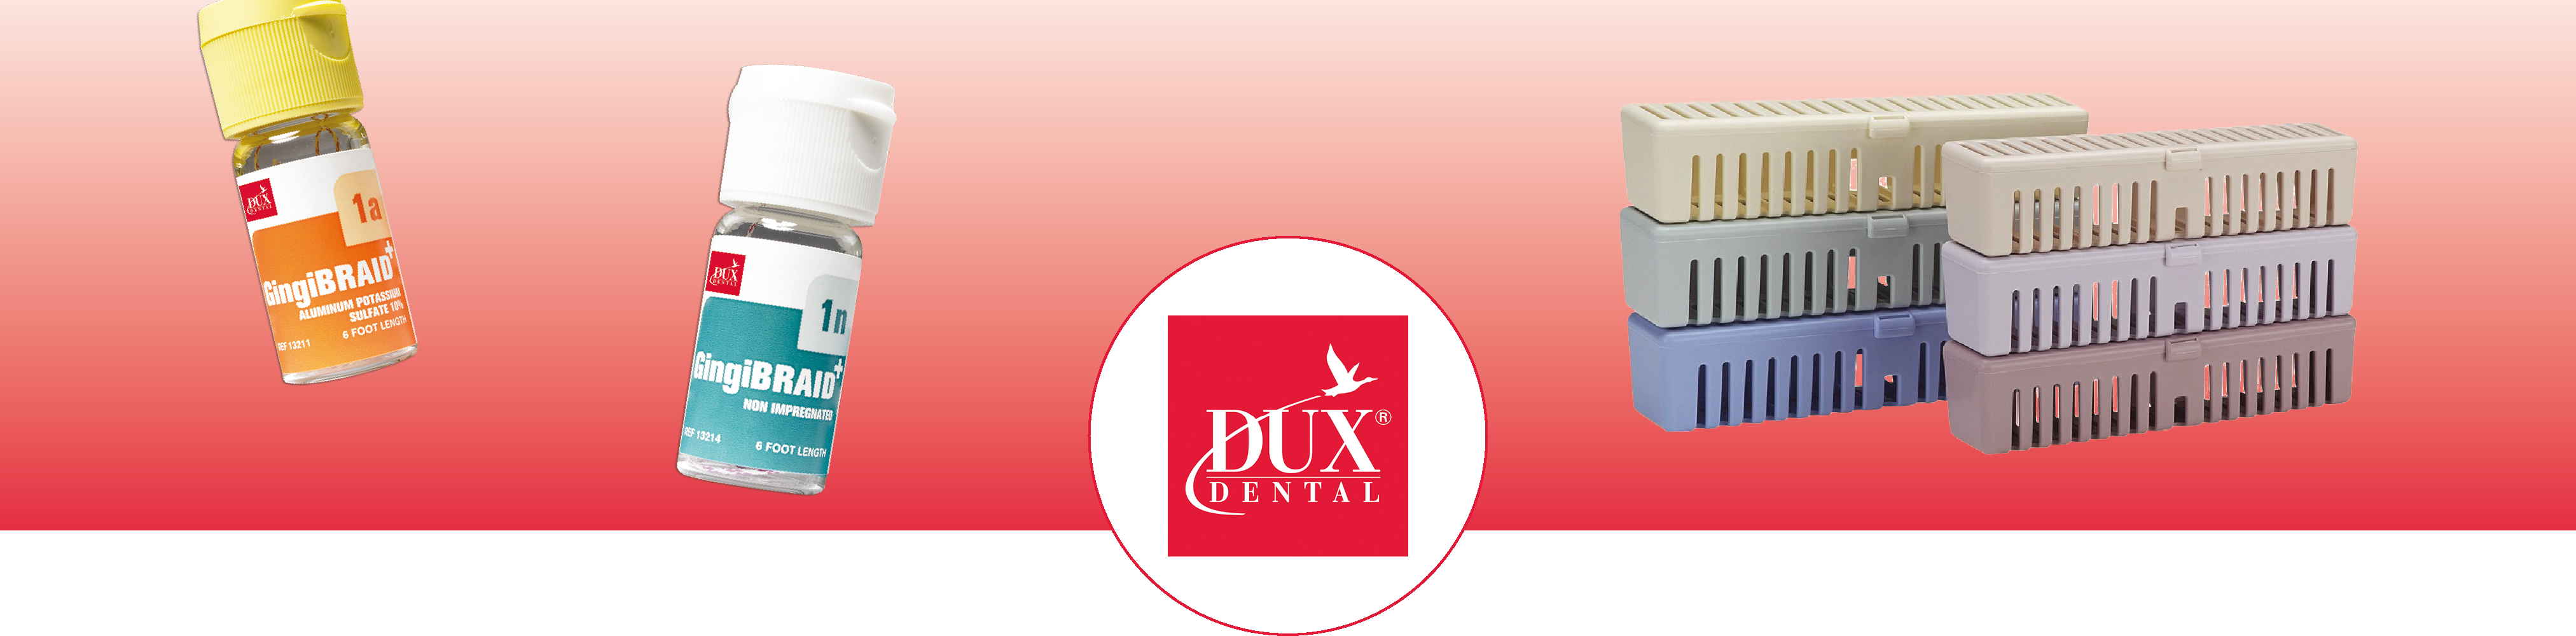 banner_dux_dental